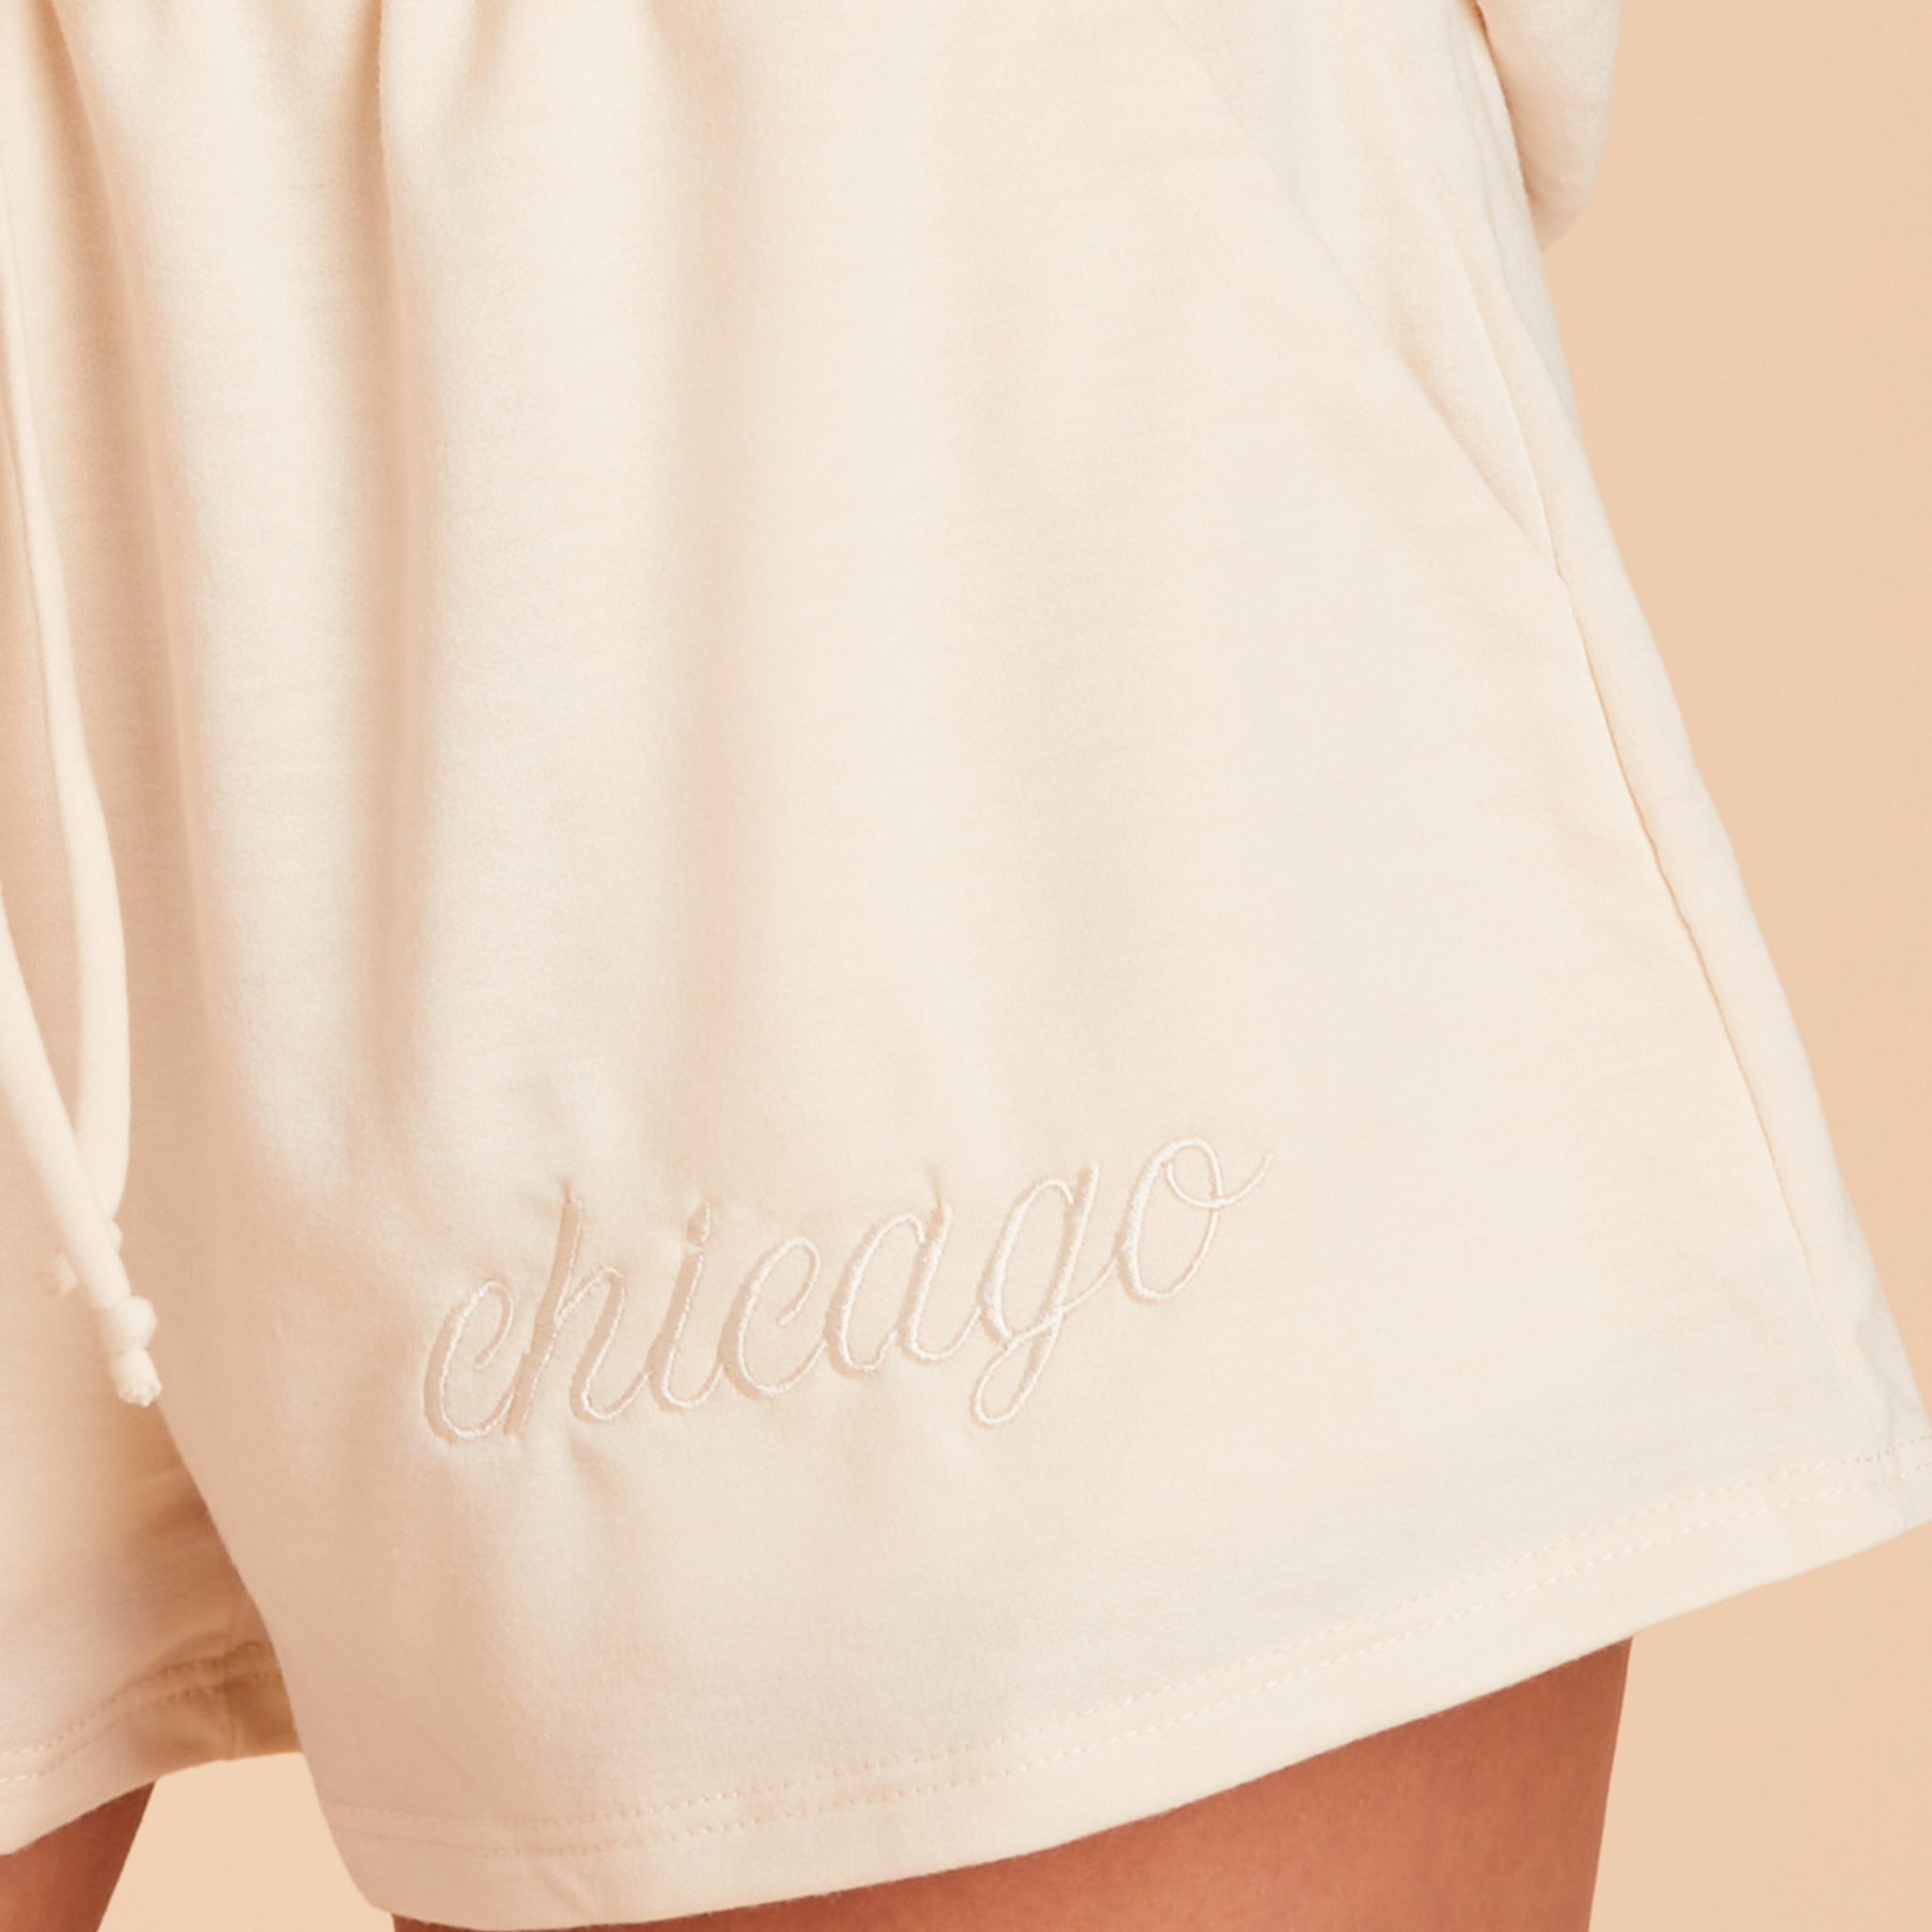 Monogram Shorts in vanilla cream front view